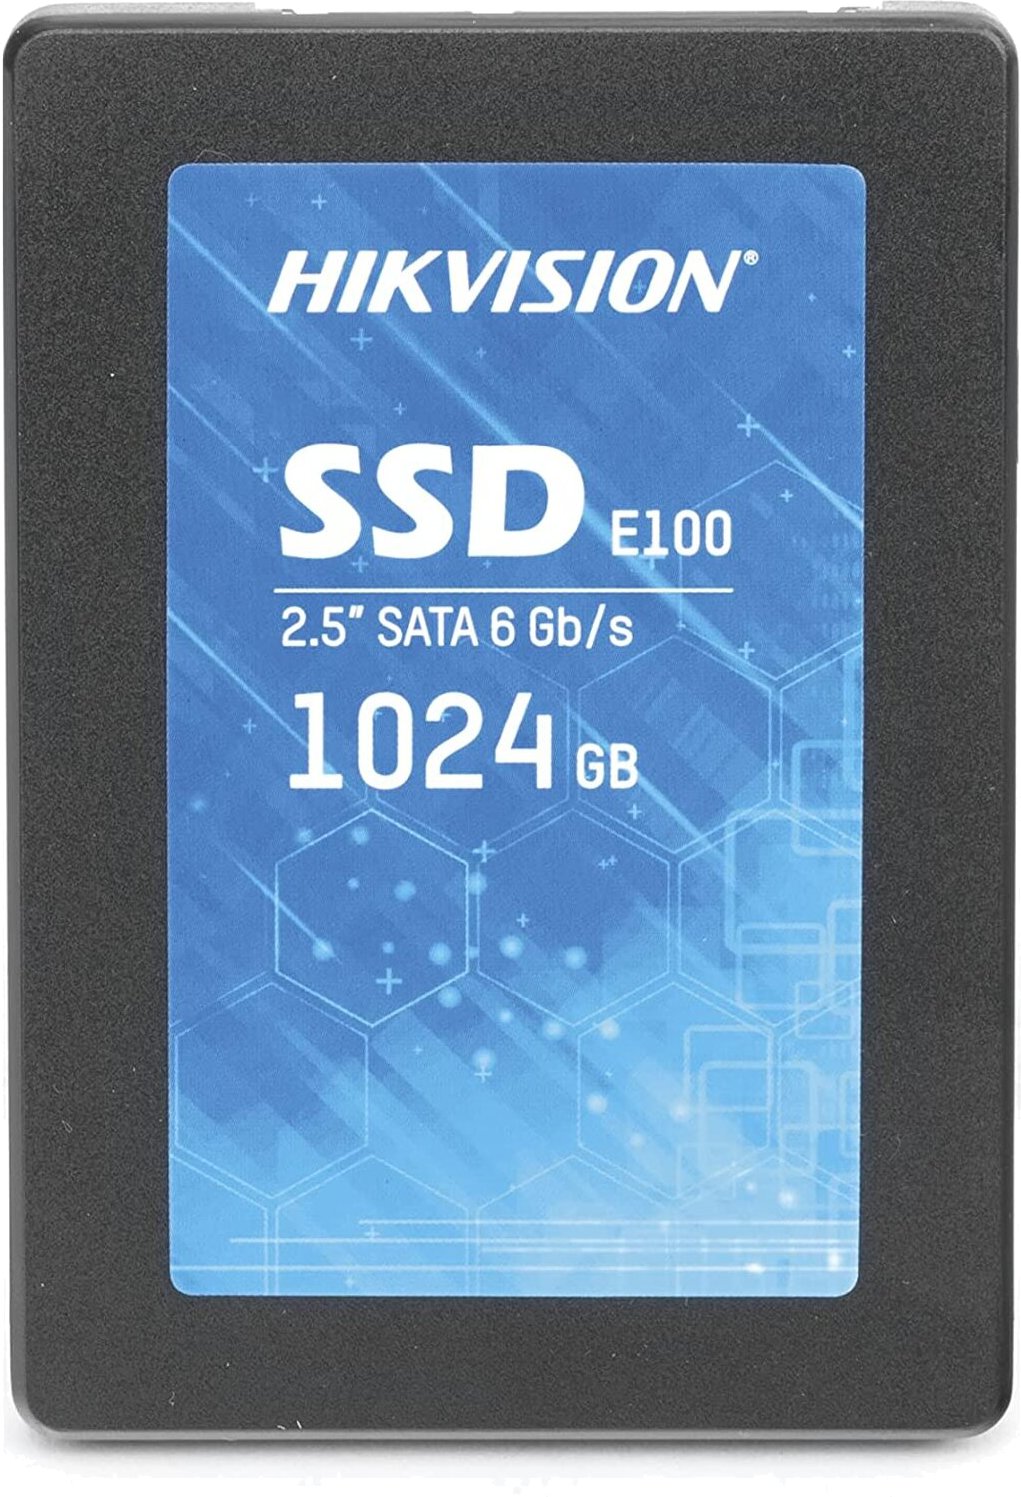  Hikvision E100 1Tb SATA (HS-SSD-E100/1024G) ()